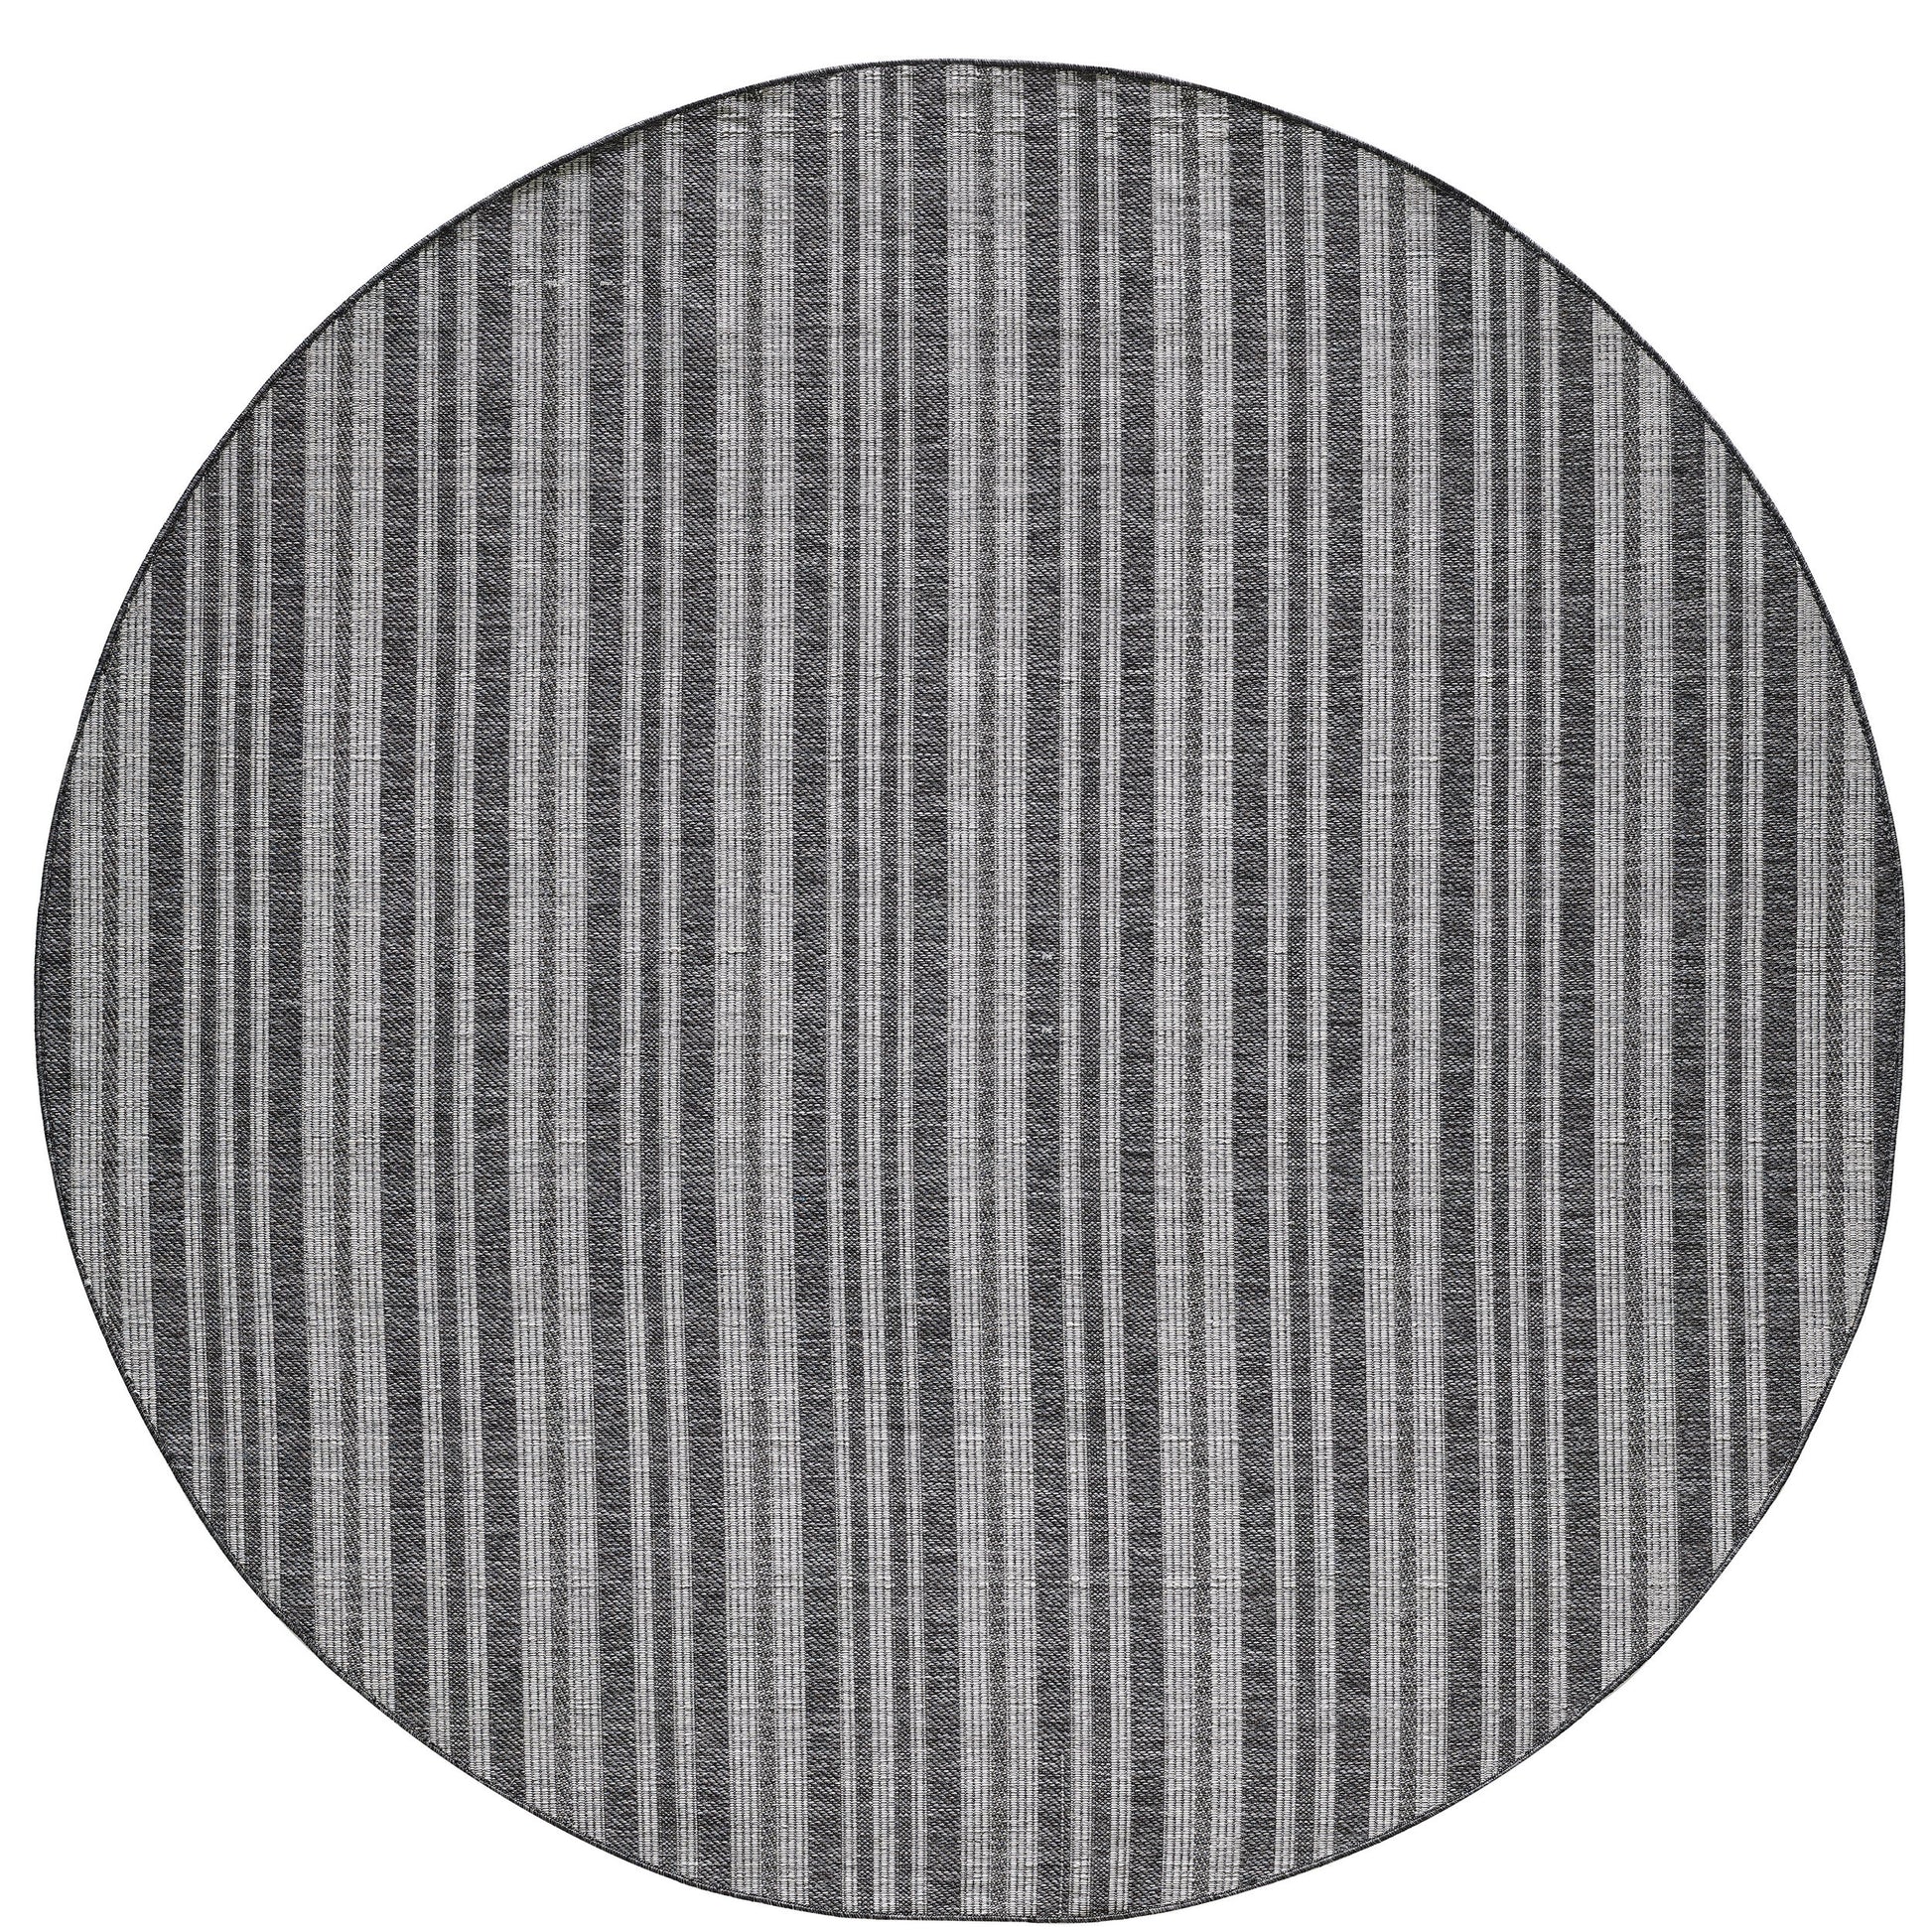 KAS Provo 5791 Stripes Grey Area Rug